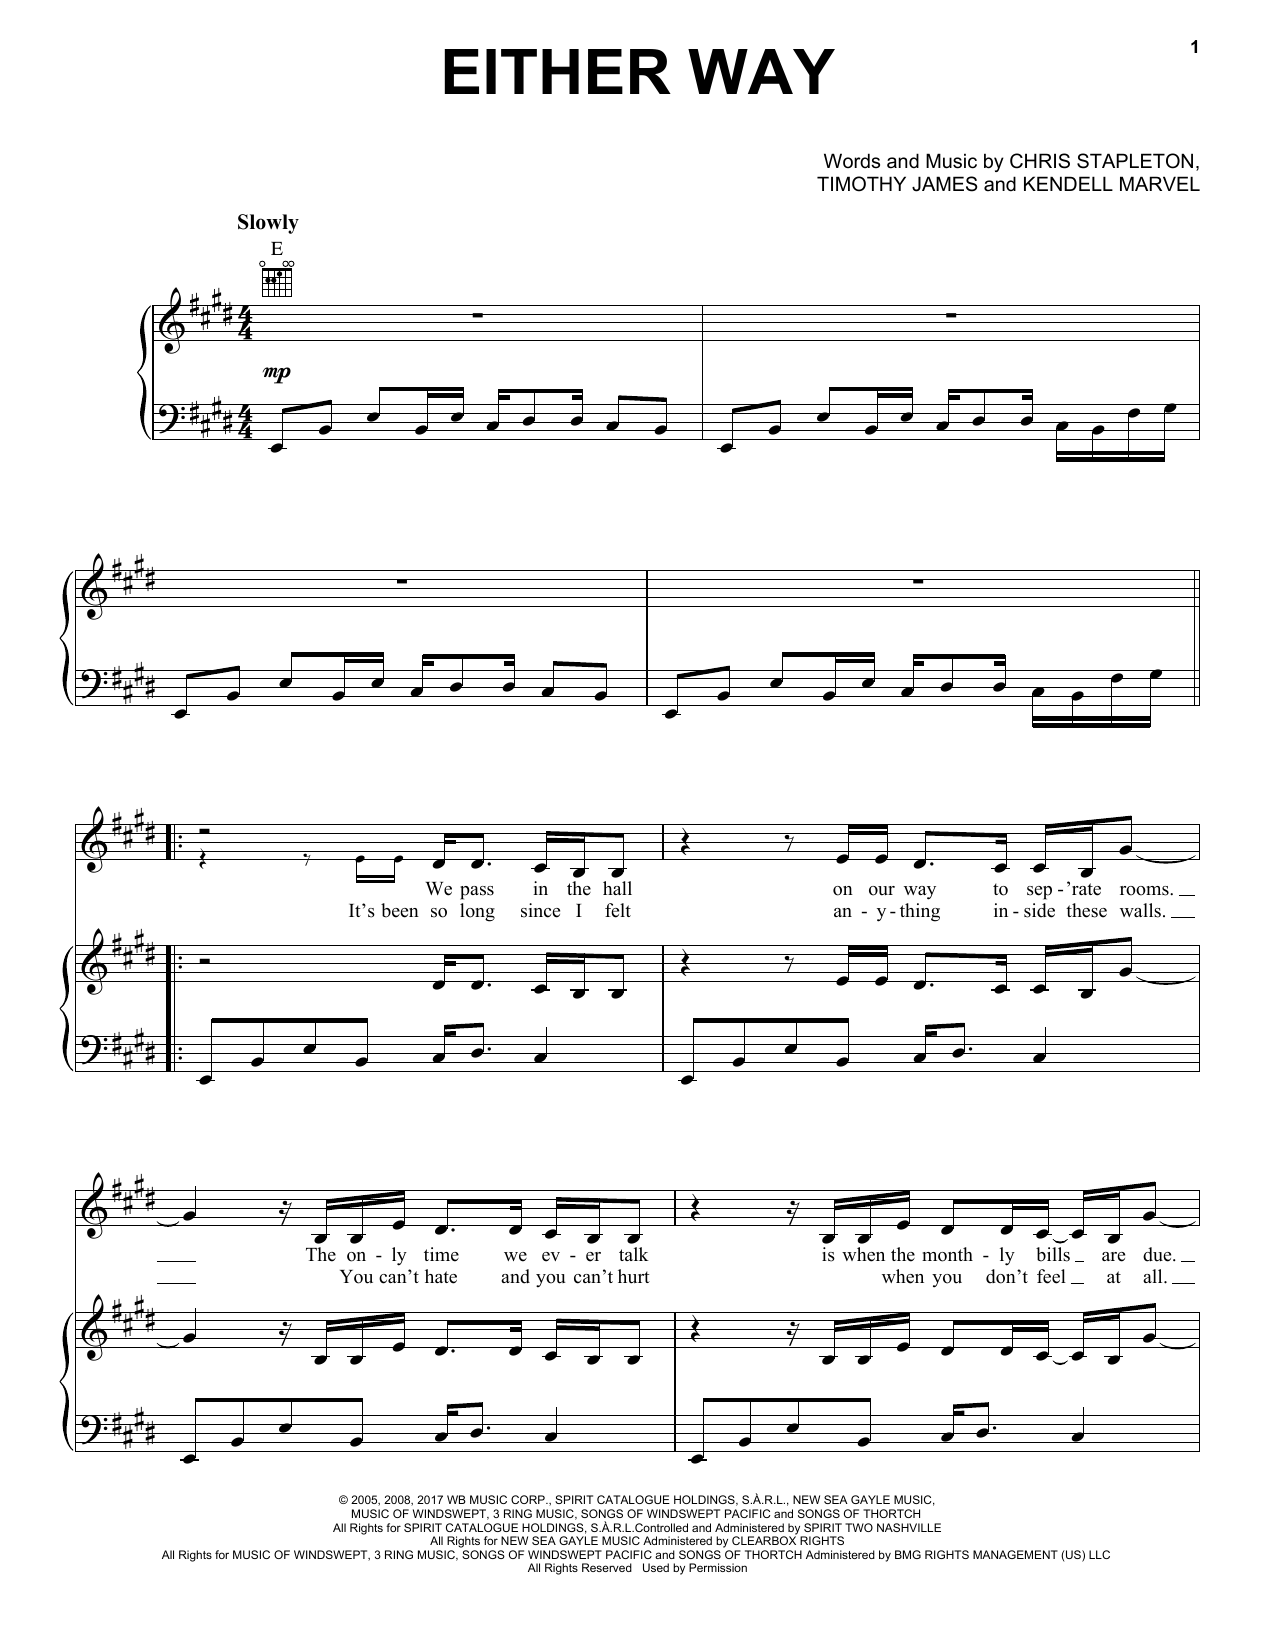 Chris Stapleton Either Way Sheet Music Notes & Chords for Guitar Tab - Download or Print PDF